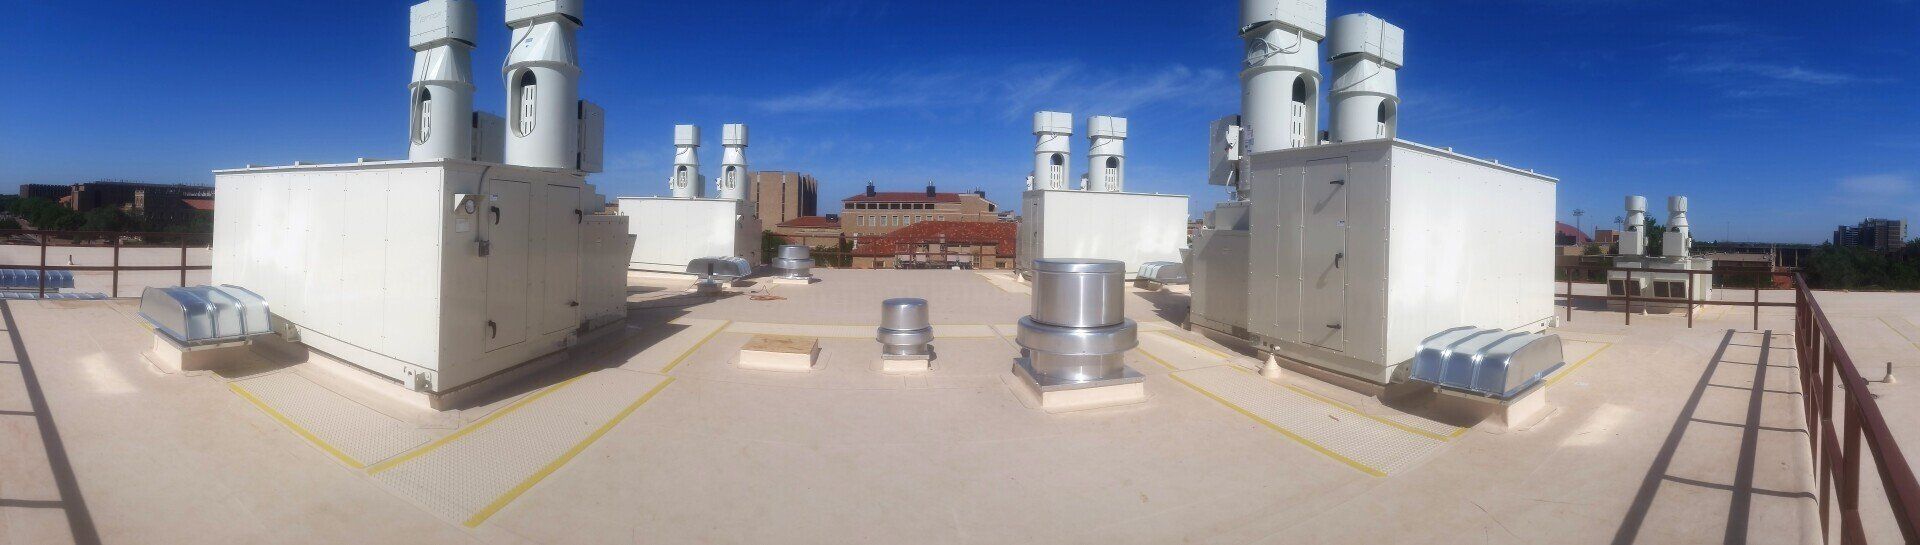 HVAC Manufacturer Representation – Lubbock, TX  – David G Halley & Co Inc